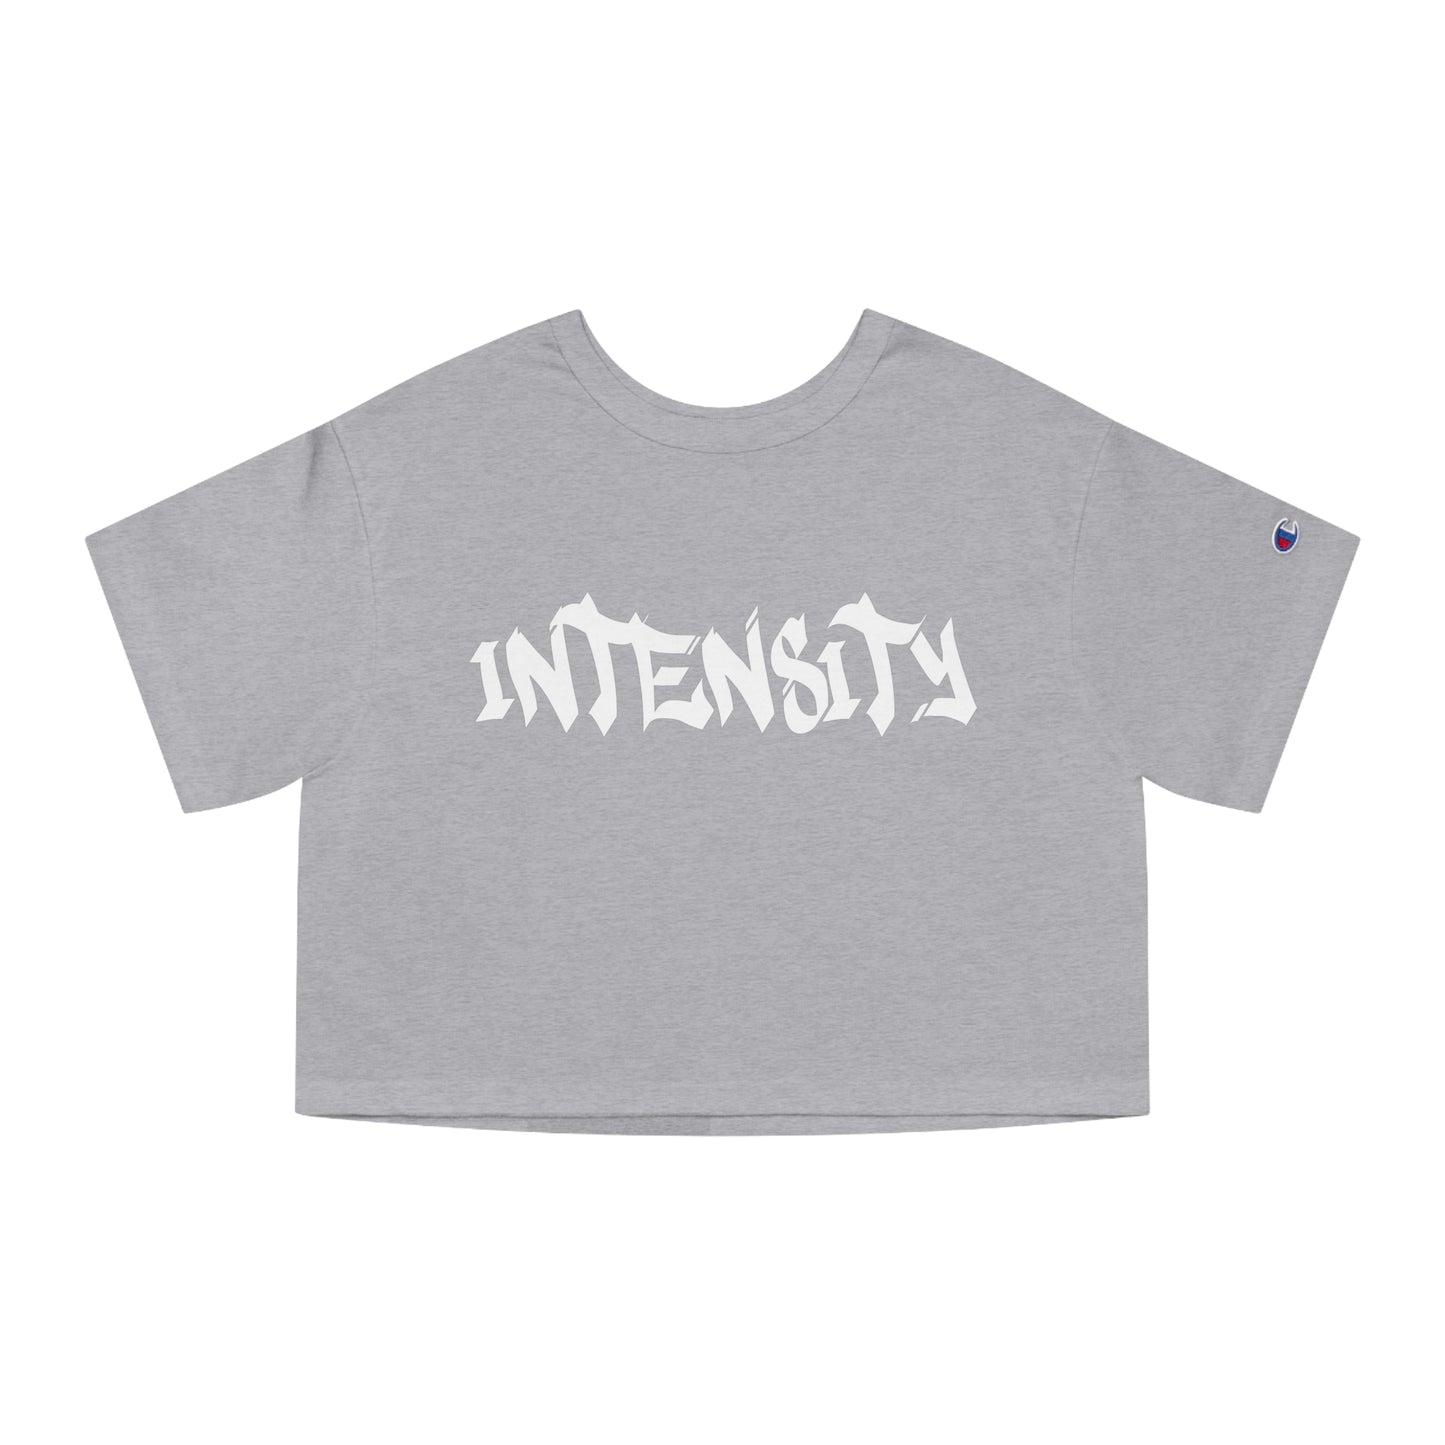 Women's "INTENSITY" Crop Top T-Shirt (White)